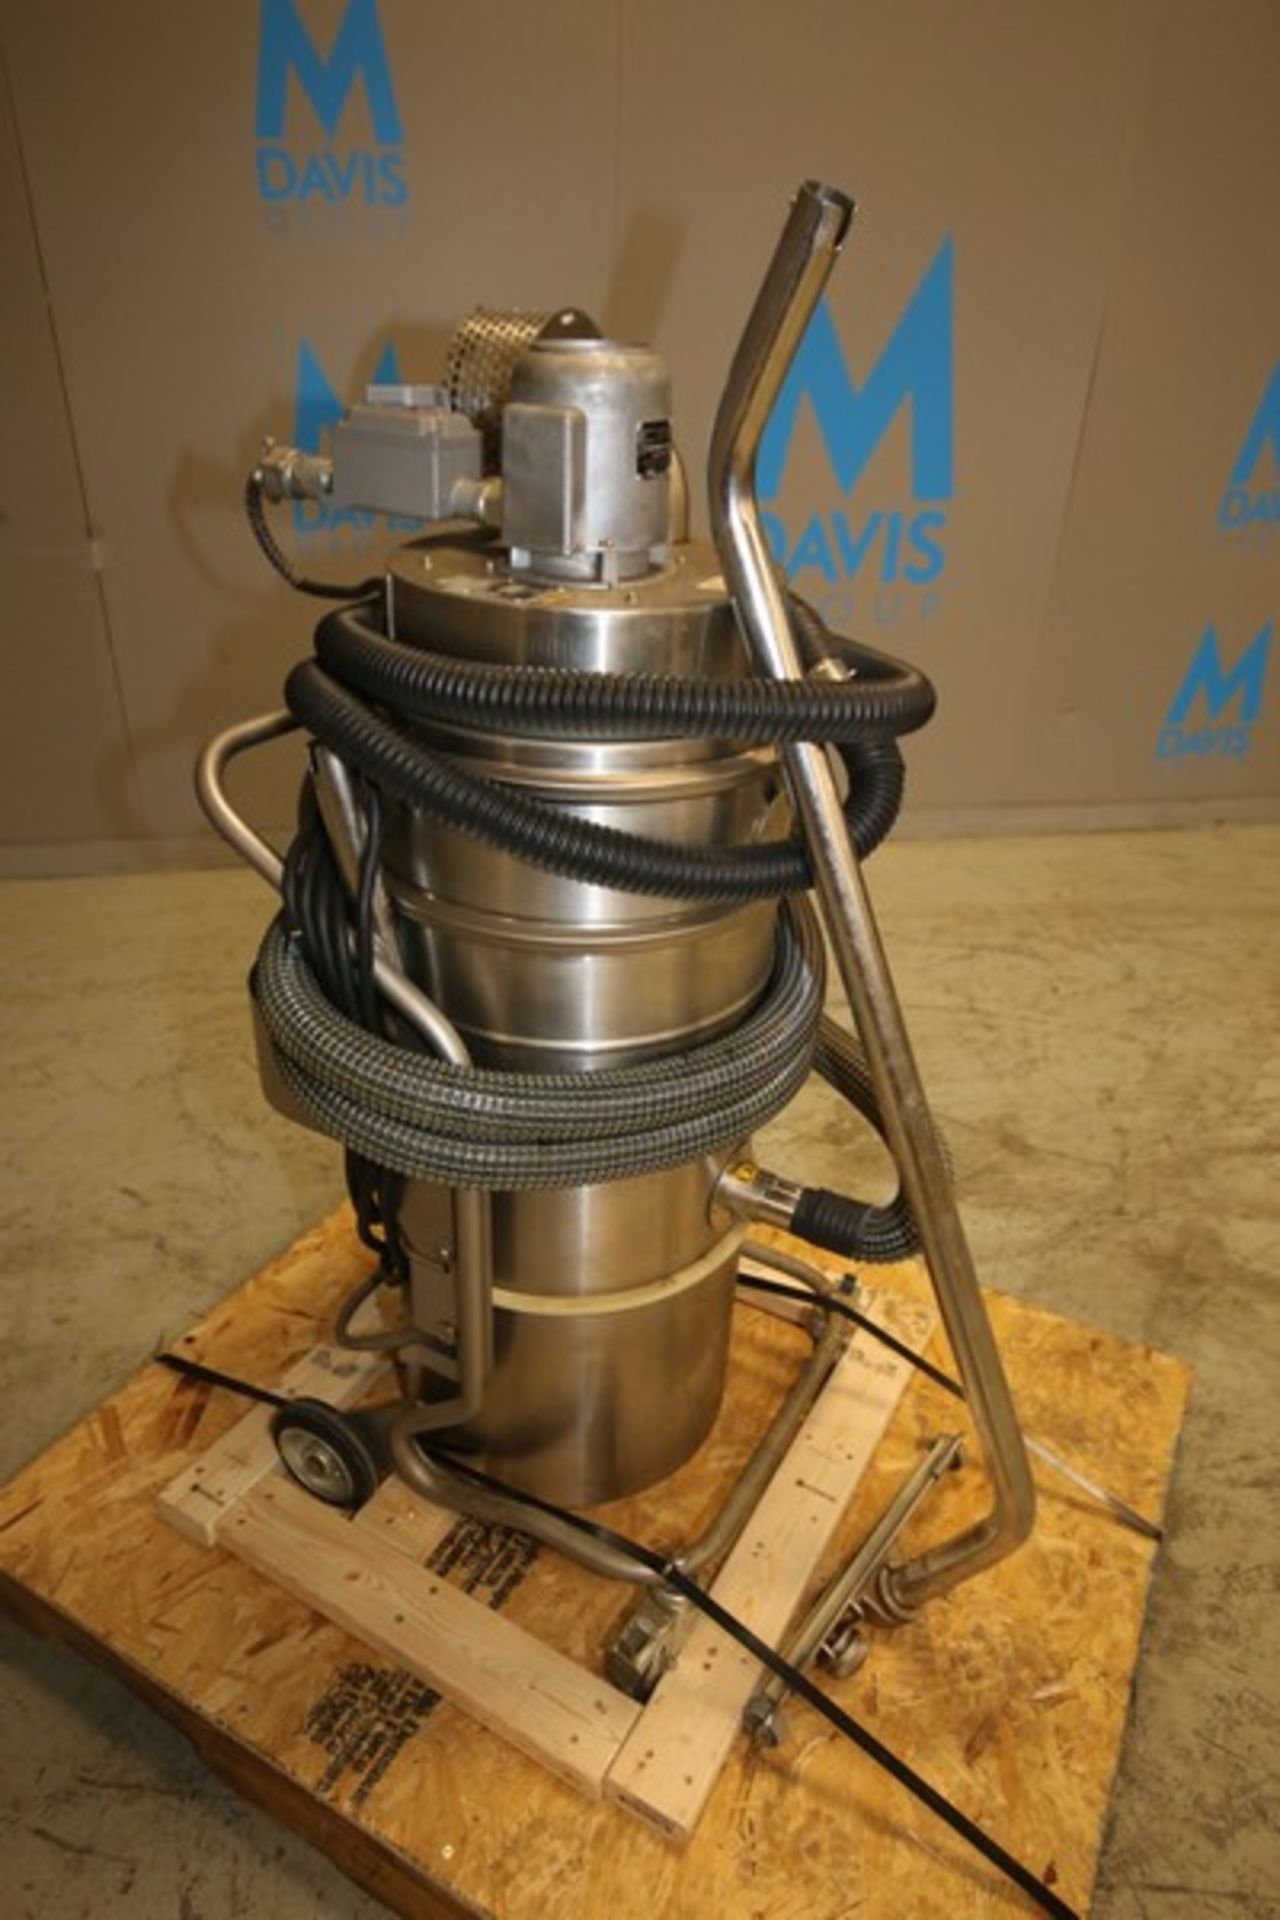 Nilfisk / CFM Industrial Vacuum, Model VHS110EXP, SN 211900194, 110V (INV#101546) (Located @ the MDG - Image 2 of 4